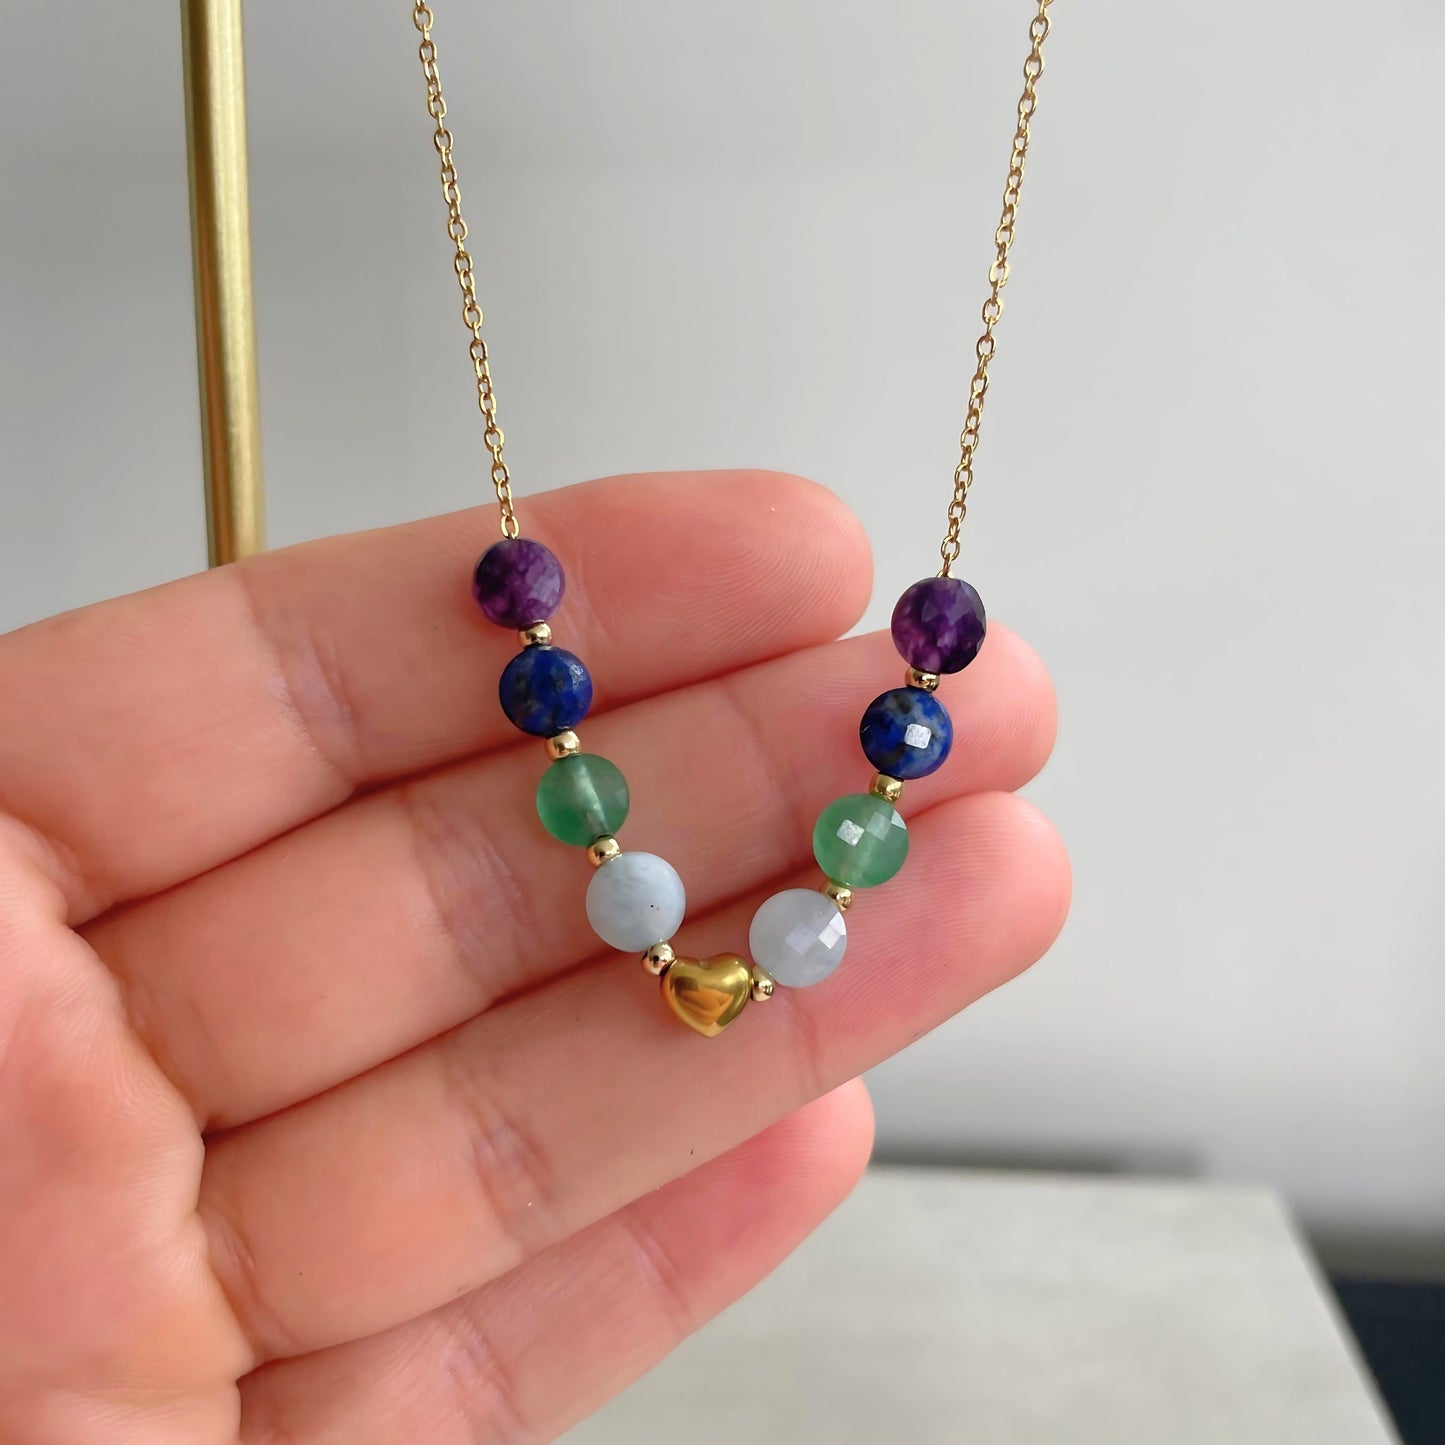 Dainty Colourful Beads Gemstone Tiny Heart Charm Necklace - Bohemian Rainbow Natural Stones Multicolour Necklace - Boho Layered Necklace